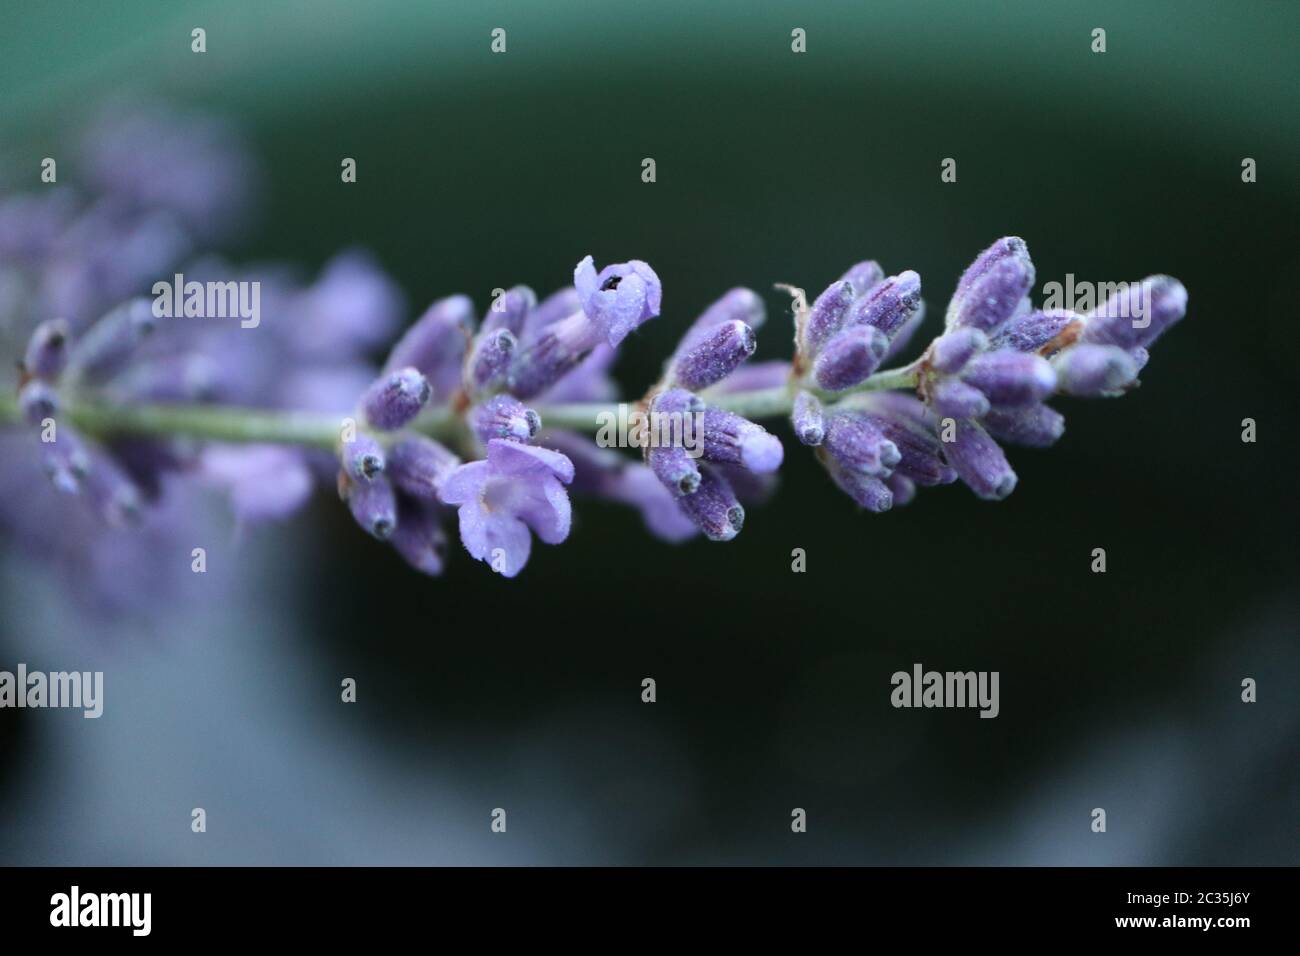 fragrant purple blossoms of lavender (Lavandula angustifolia) Stock Photo